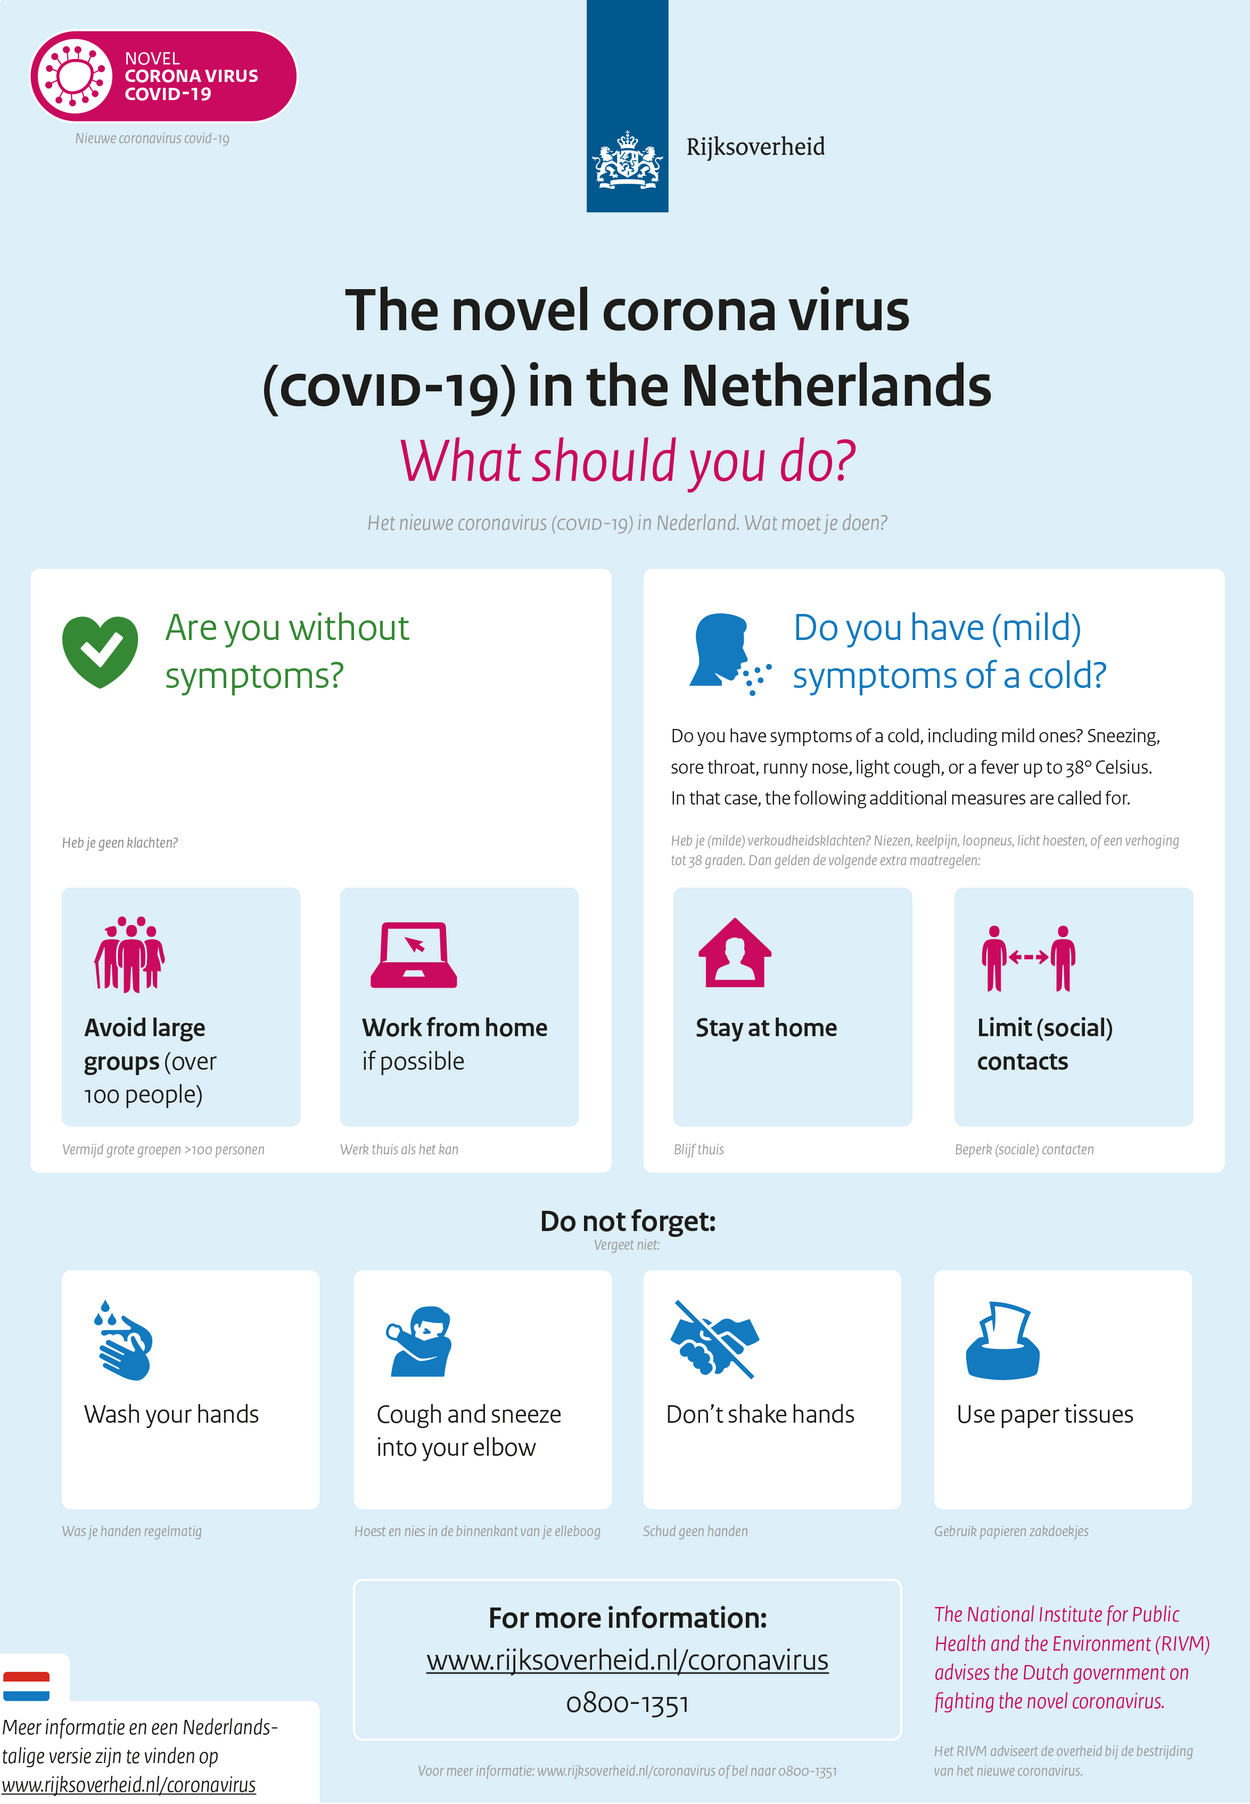 New Measures To Stop Spread Of Coronavirus In The Netherlands